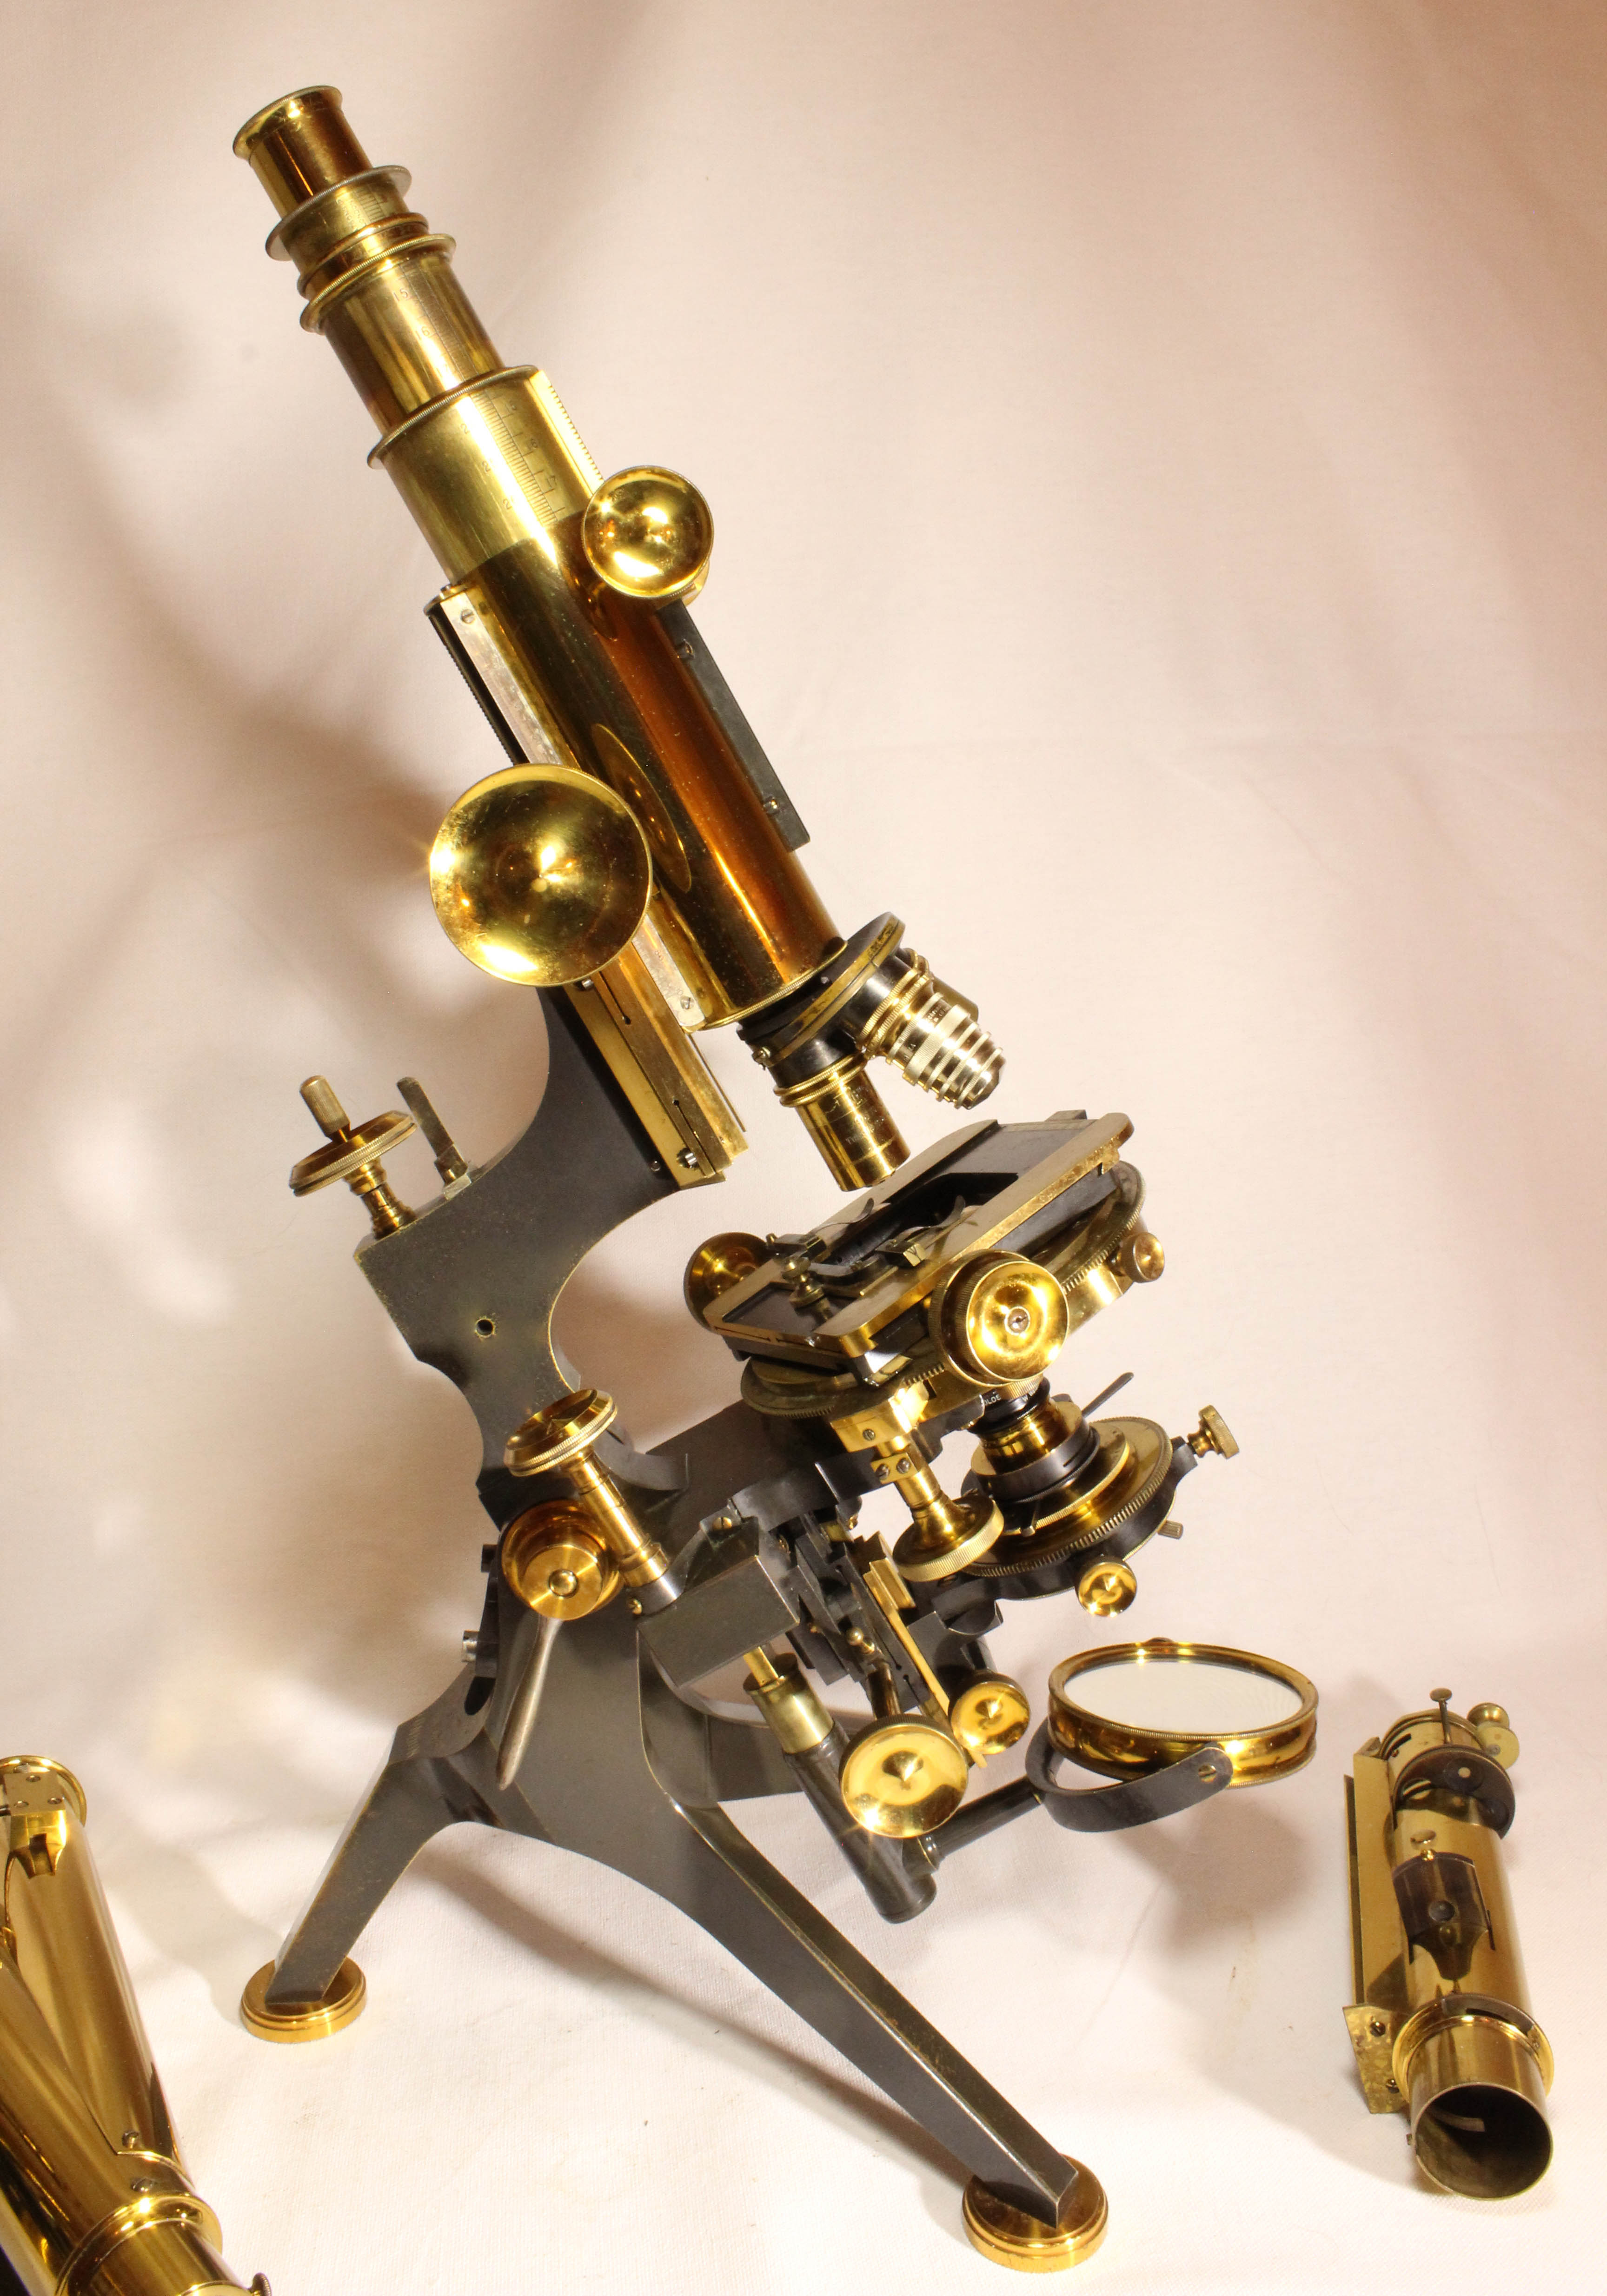 Grand Van Heurck Microscope